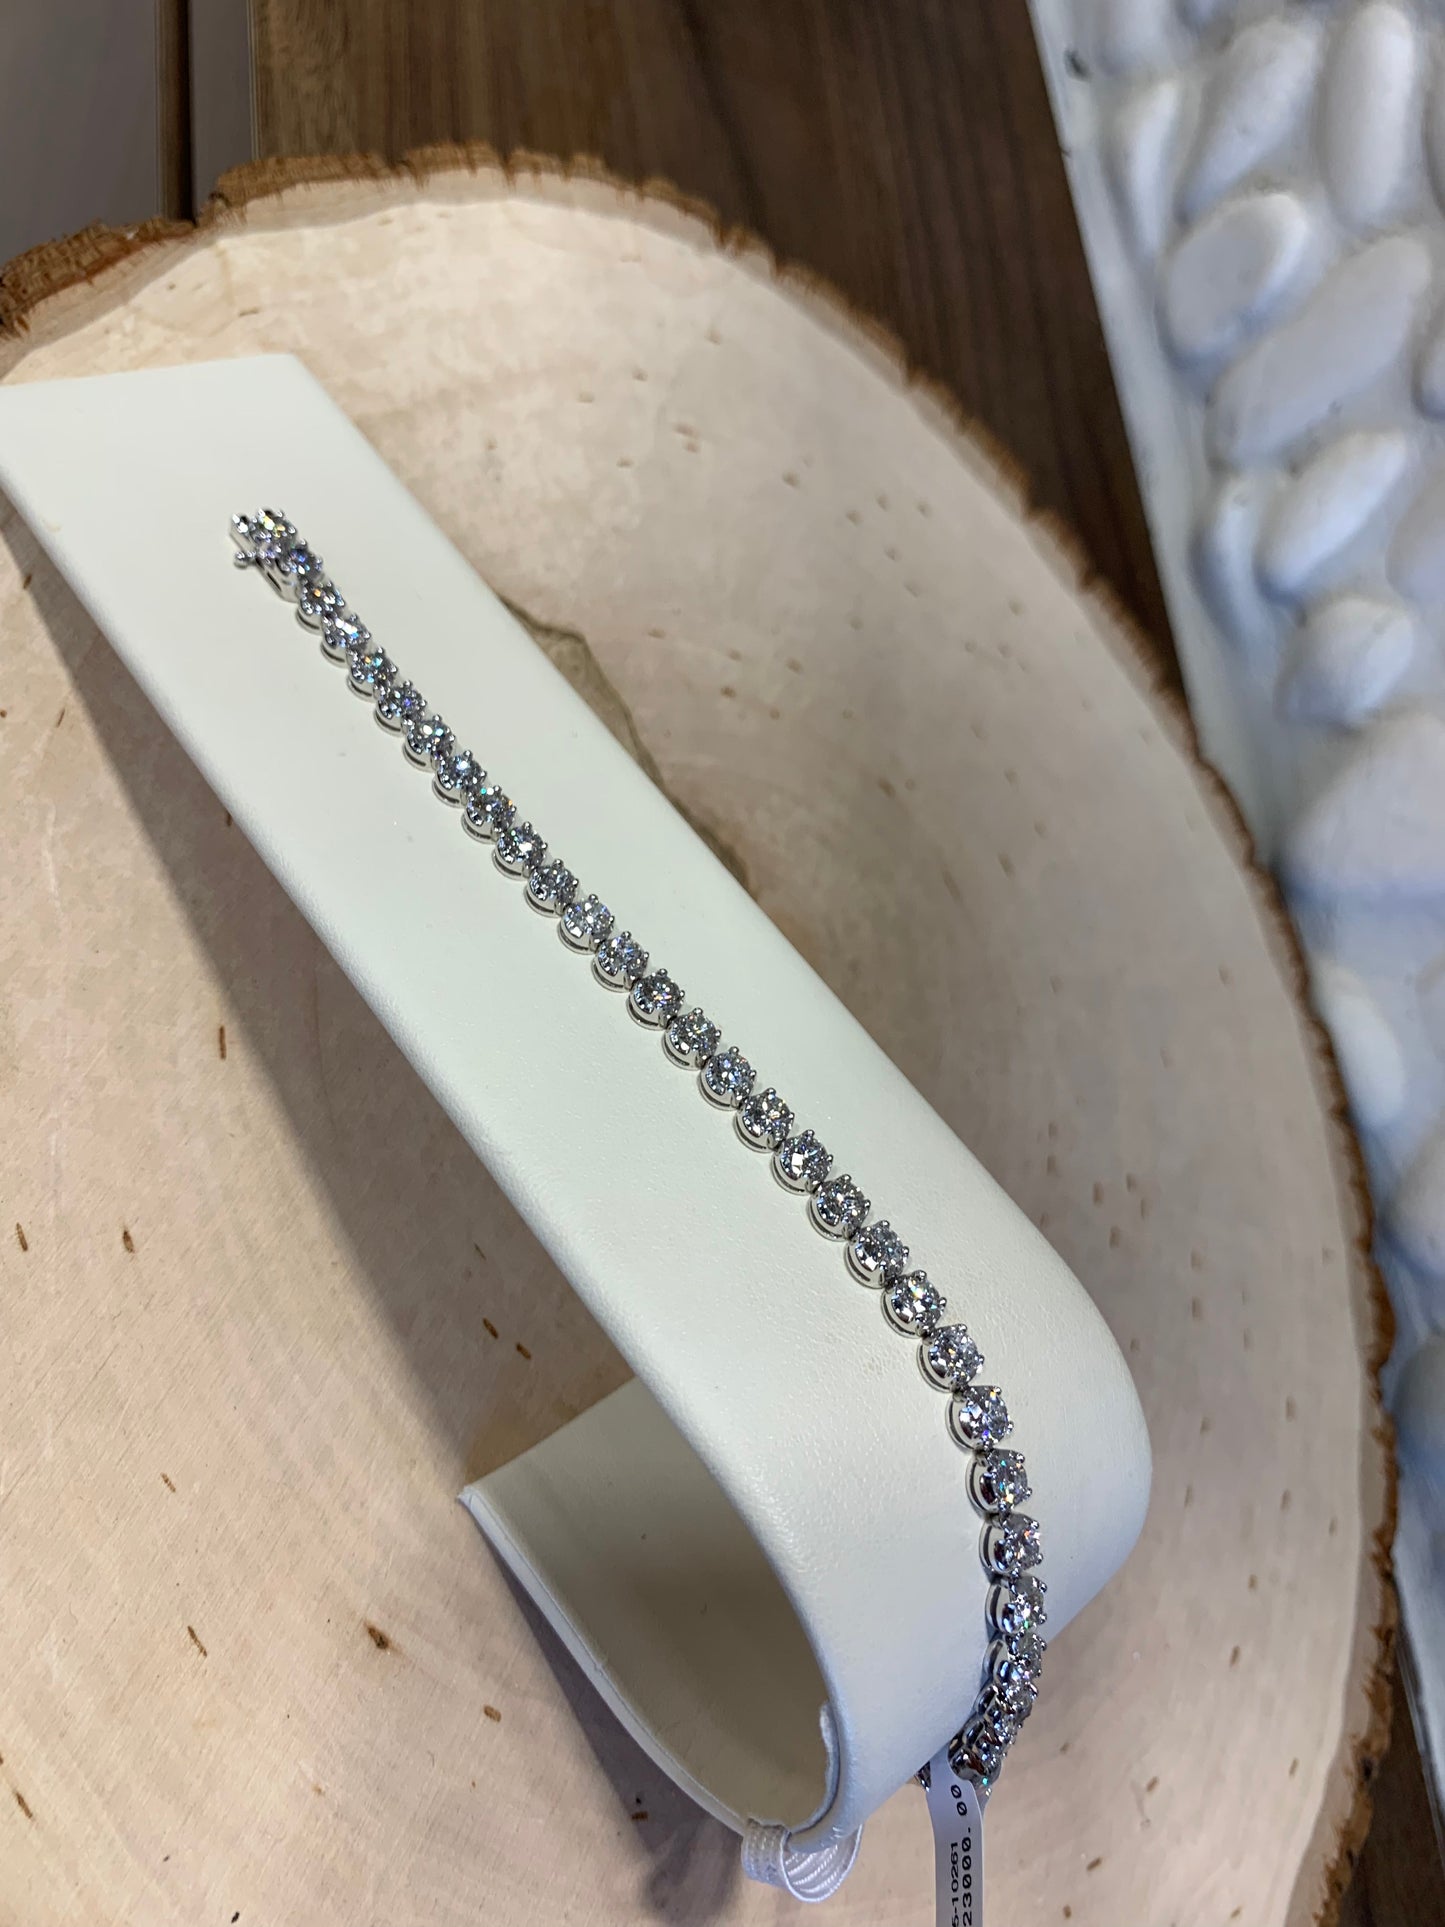 14k White Gold 7.87 CT Diamond Tennis Bracelet - The Village Jeweler